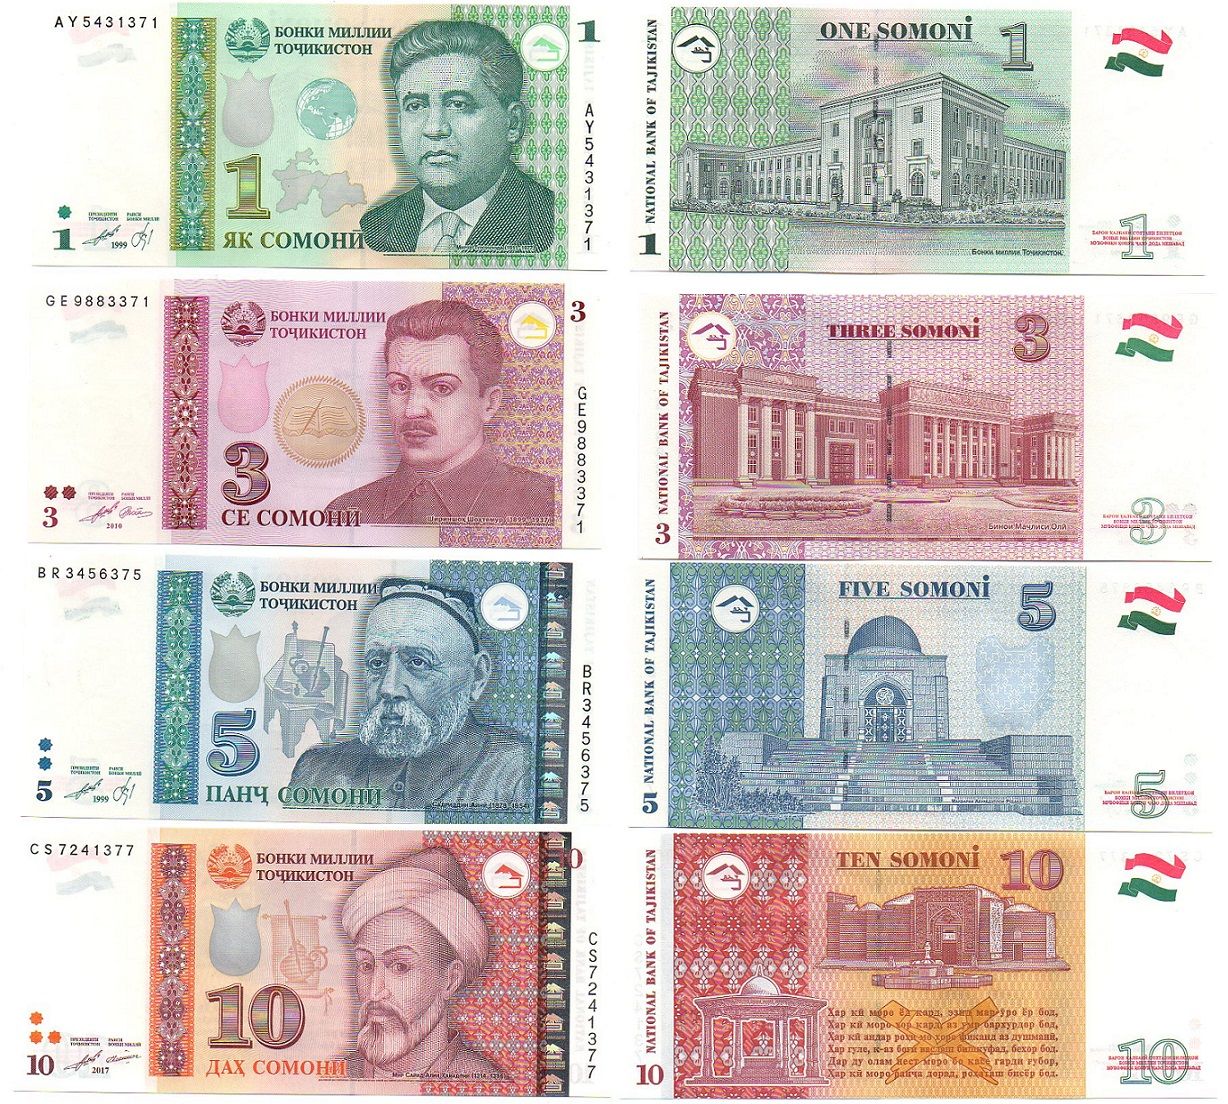 Валюта точикистон. 1 Сомони Таджикистан купюра. Банкноты Сомони 1999 набор. Деньги Таджикистана 100 сомонй. 1 Сомони 1999 Таджикистан.